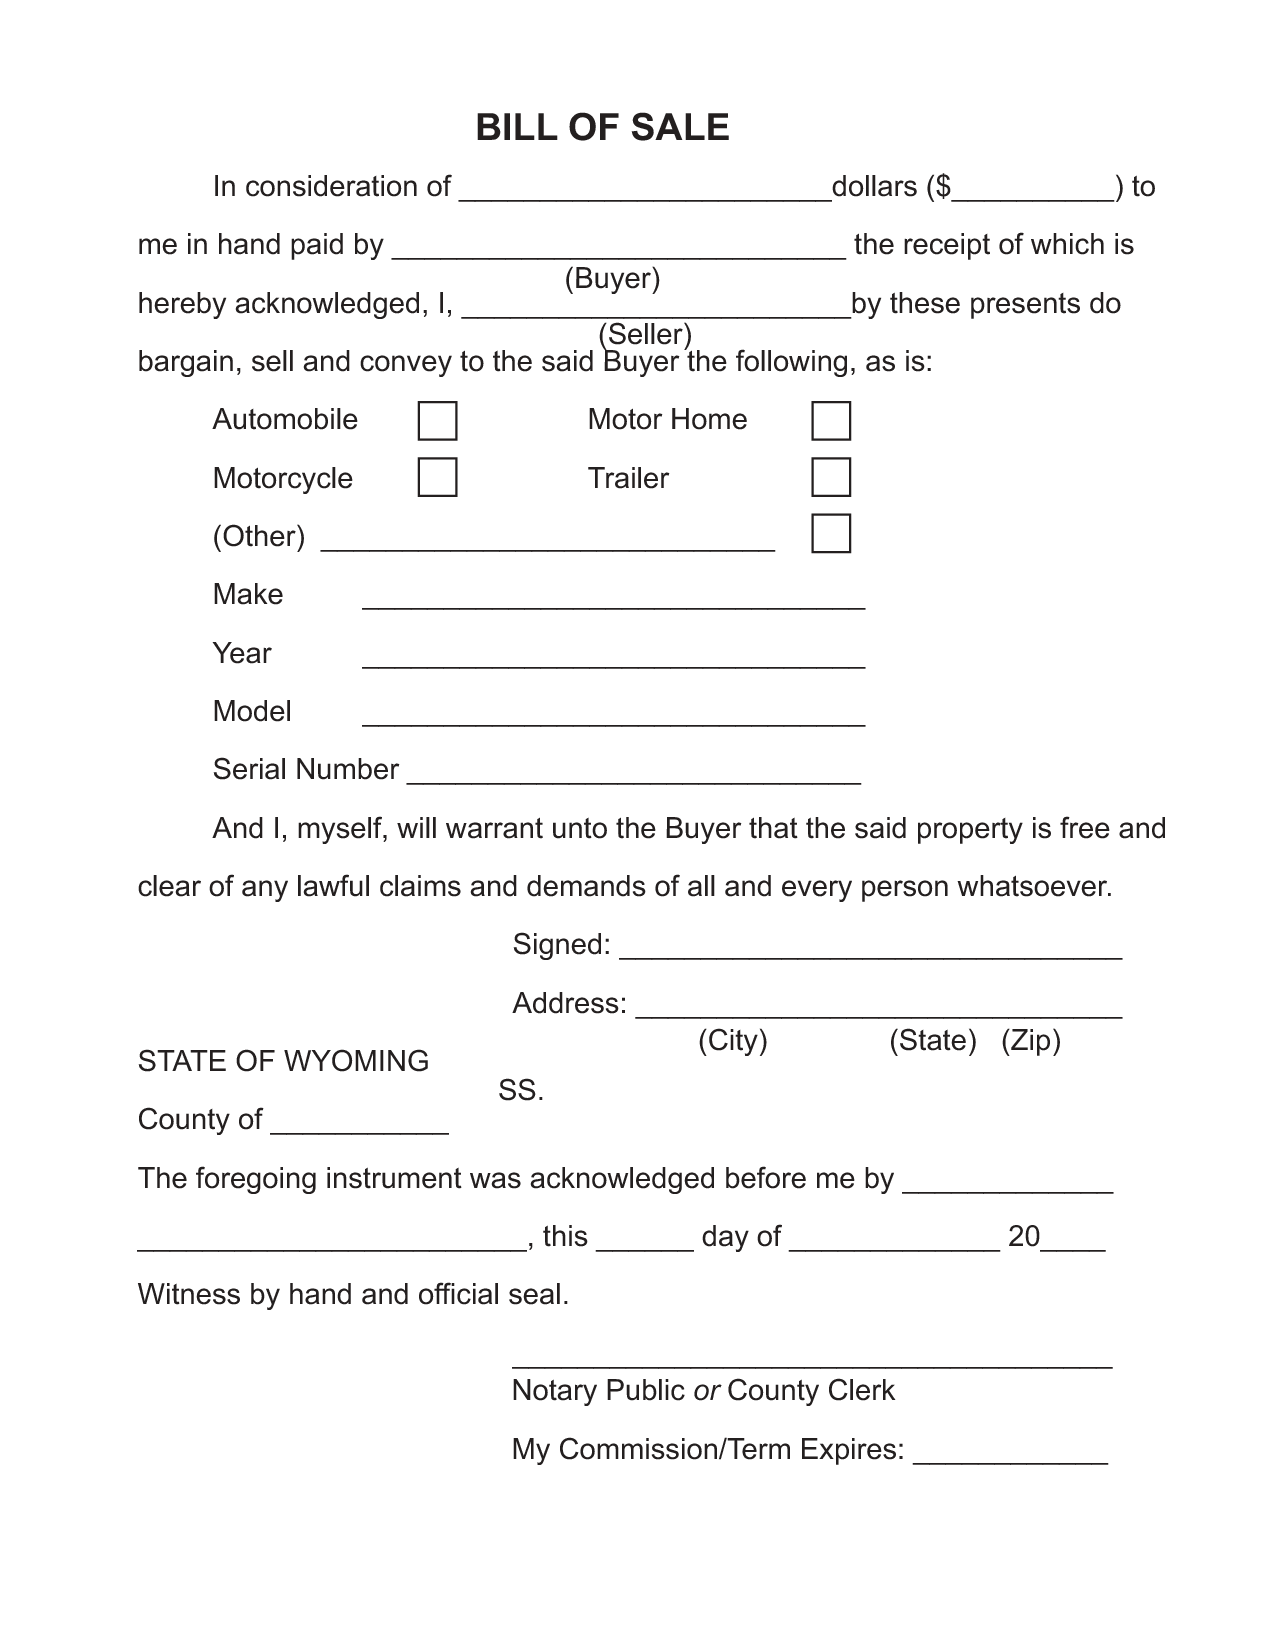 Free Printable Bill of Sale Camper Form (GENERIC)